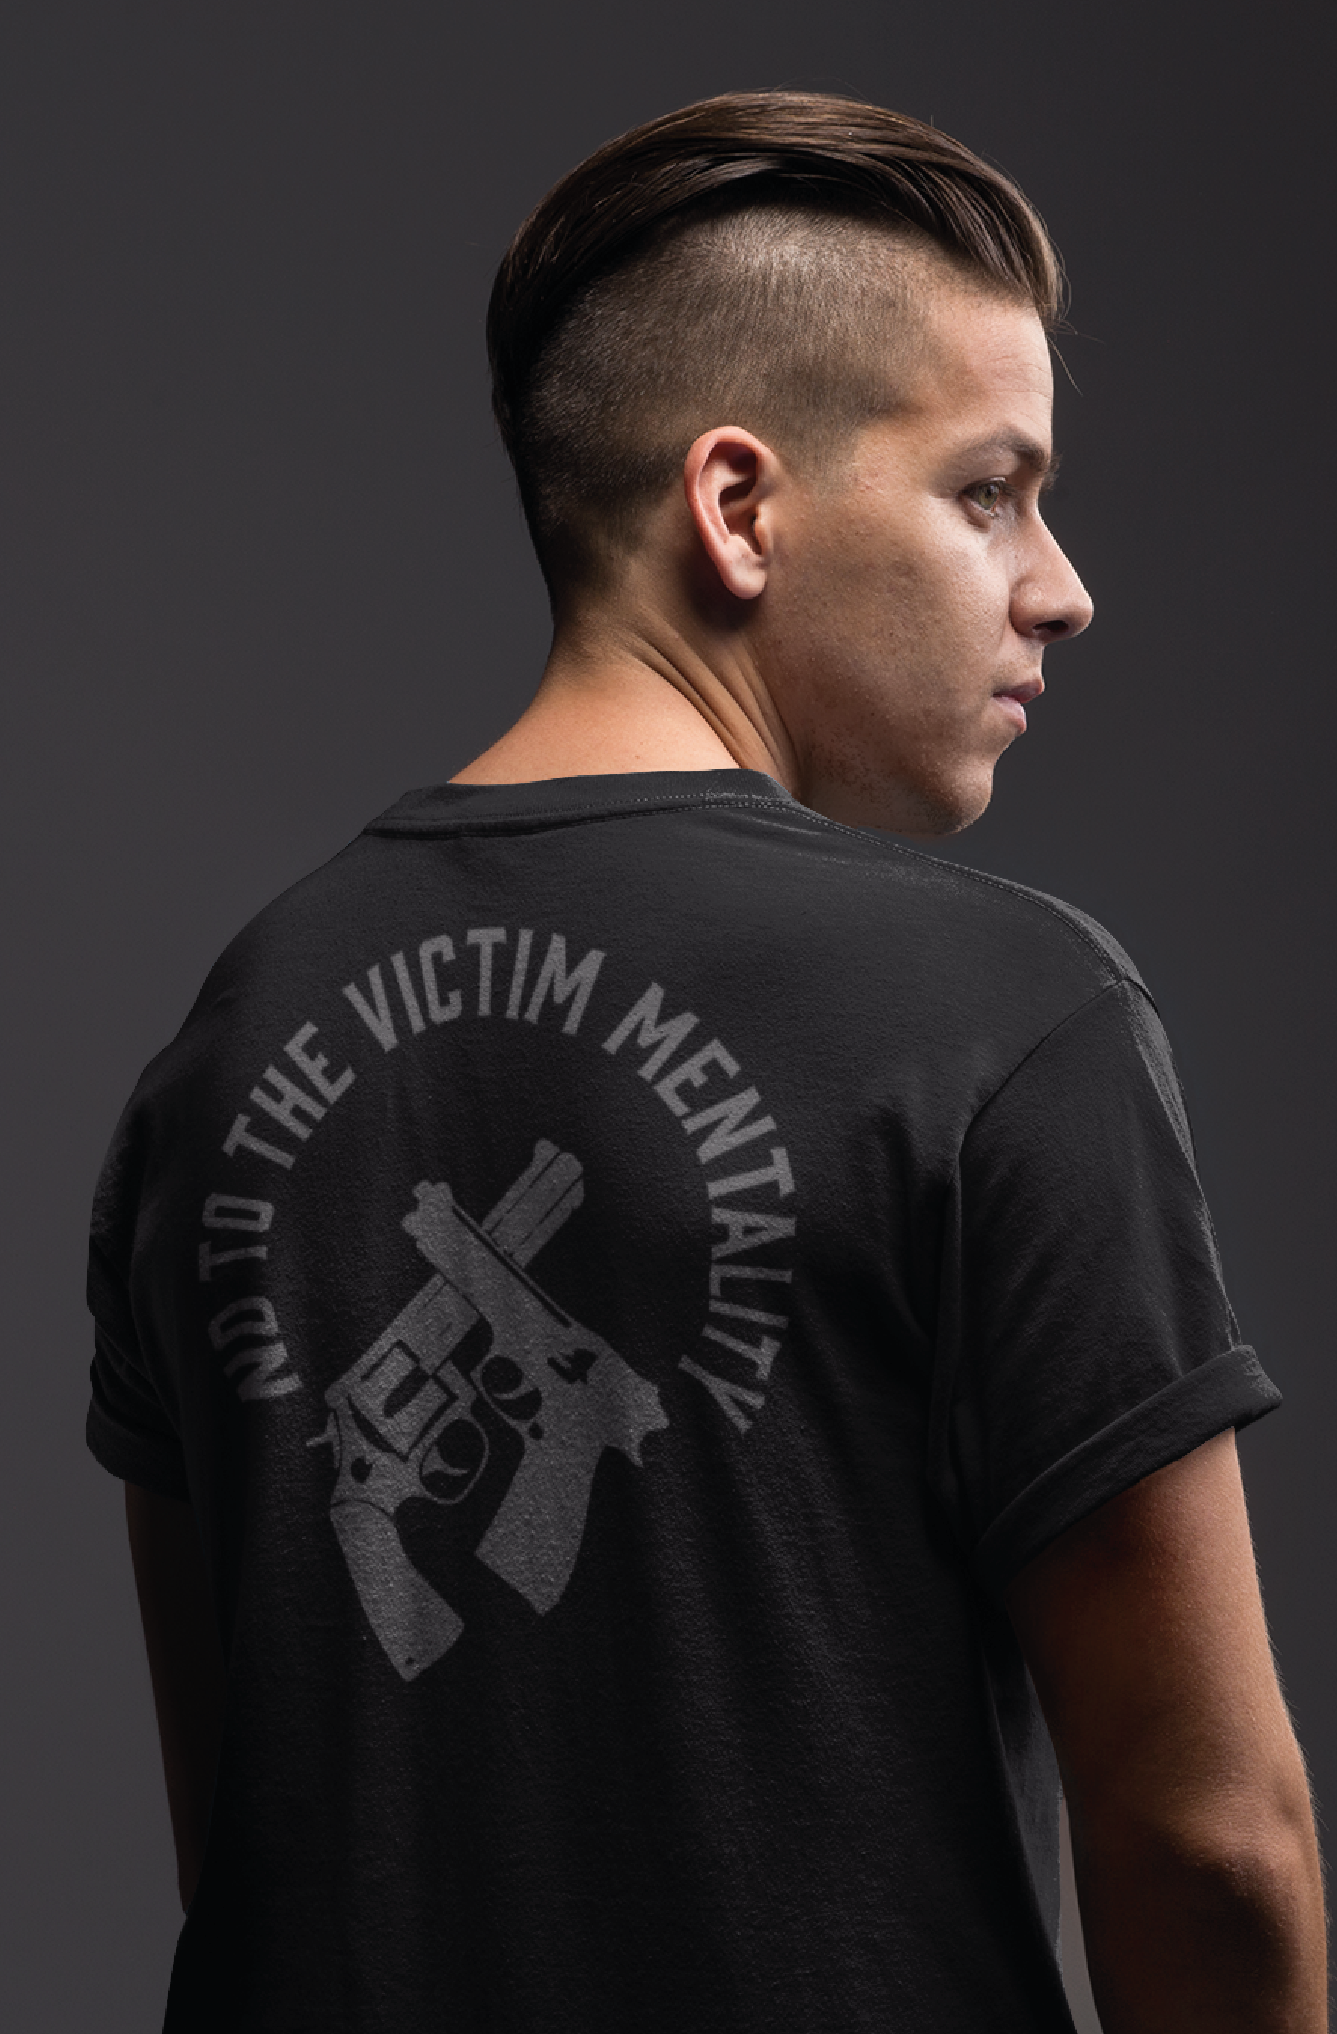 Man wearing not a victim mentality print on black tshirt